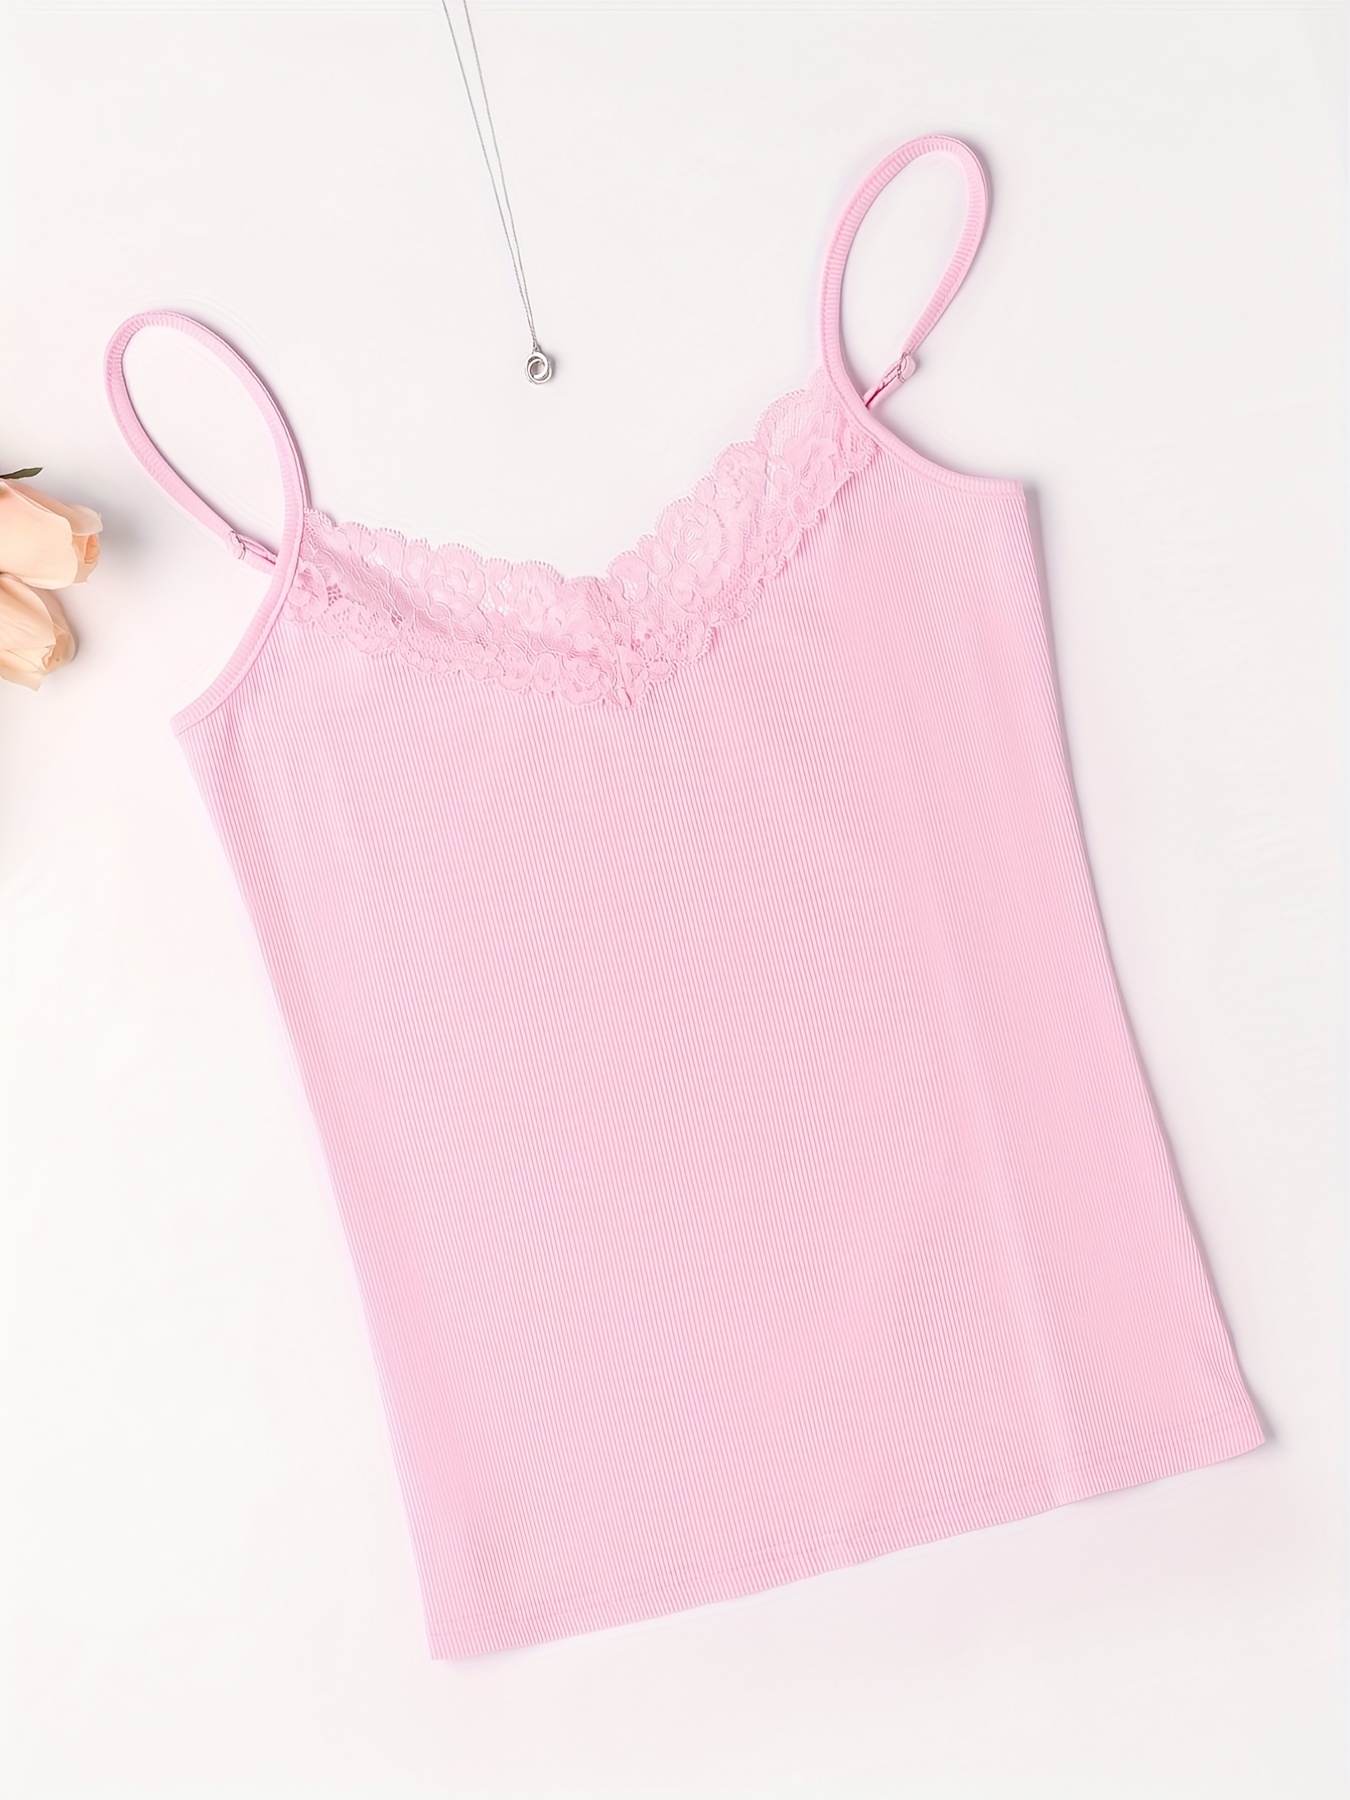 Dusty Pink Elegant Plain Contrast Lace Cami Women's Tank Tops Camis 